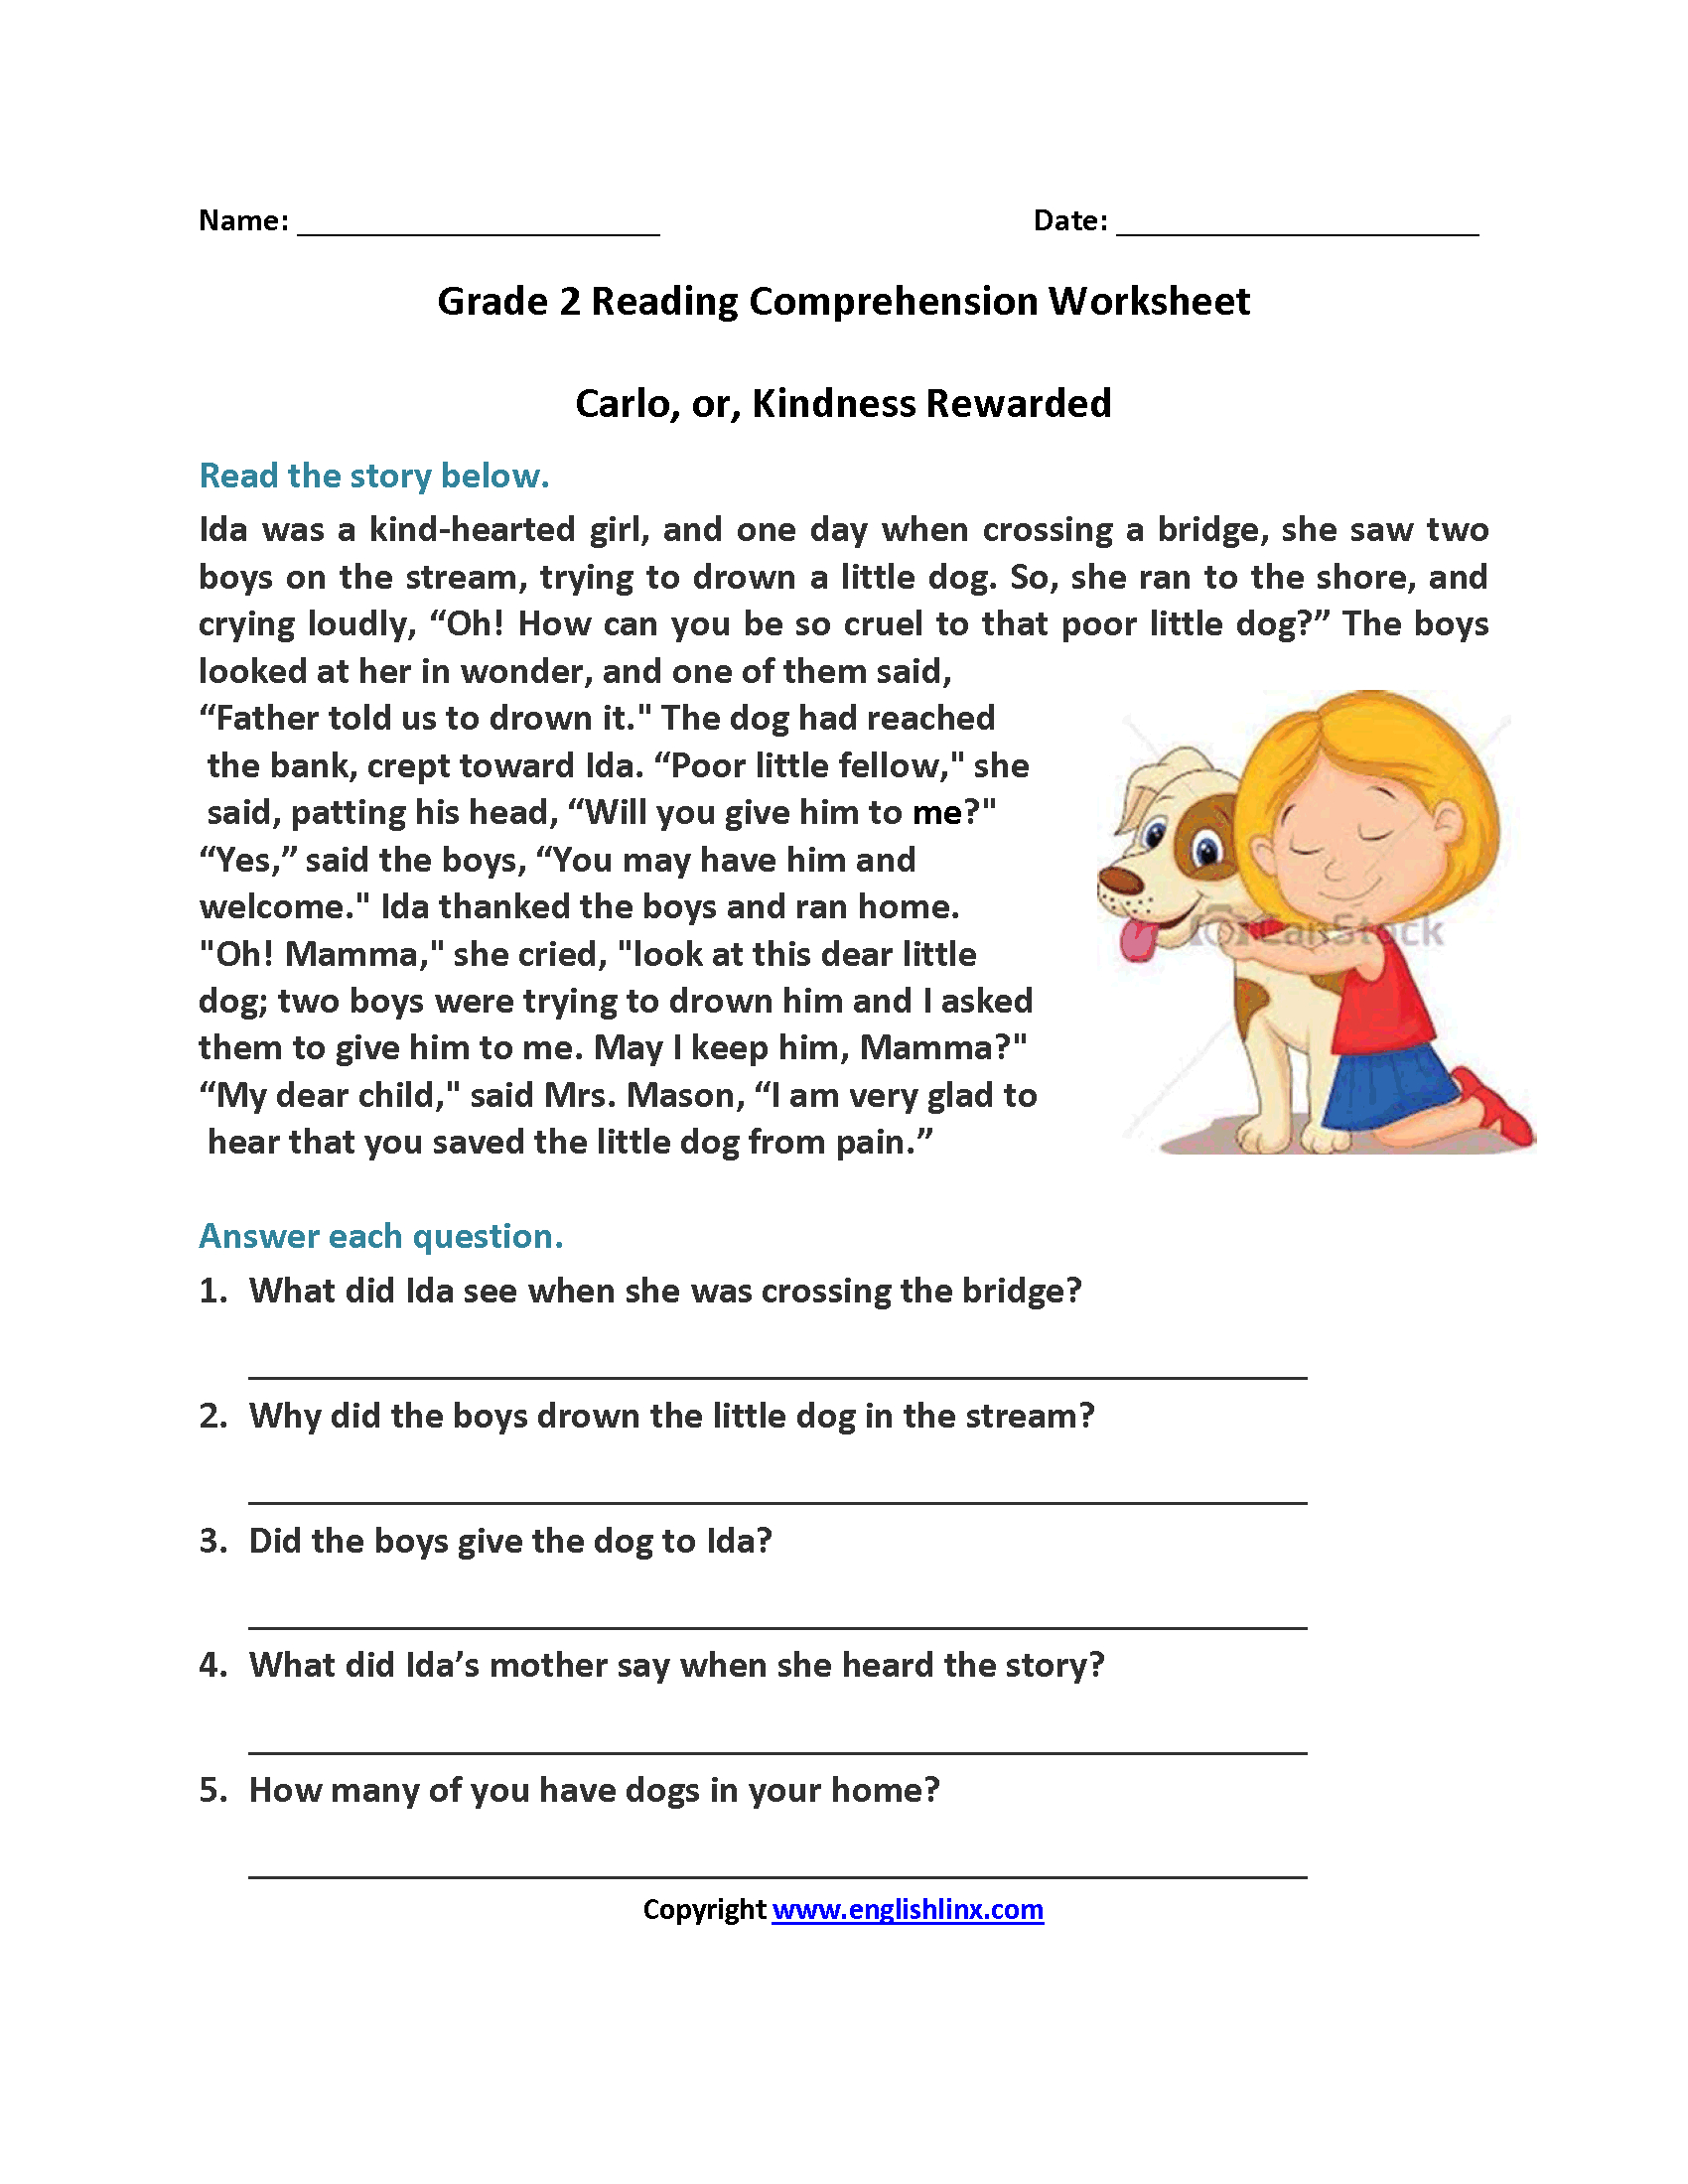 Carlo Or Kindness Rewarded Second Grade Reading Worksheets | Reading - Free Printable Comprehension Worksheets For Grade 5